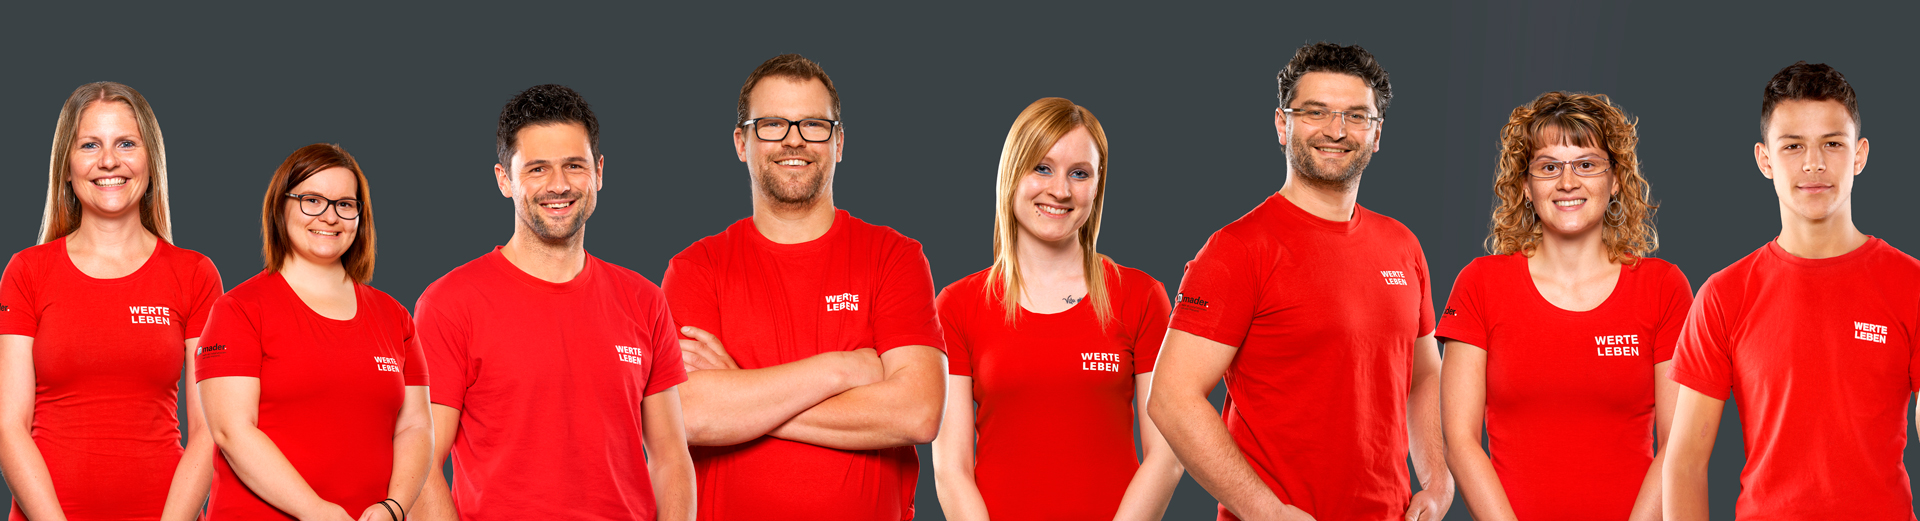 Mader GmbH - Team